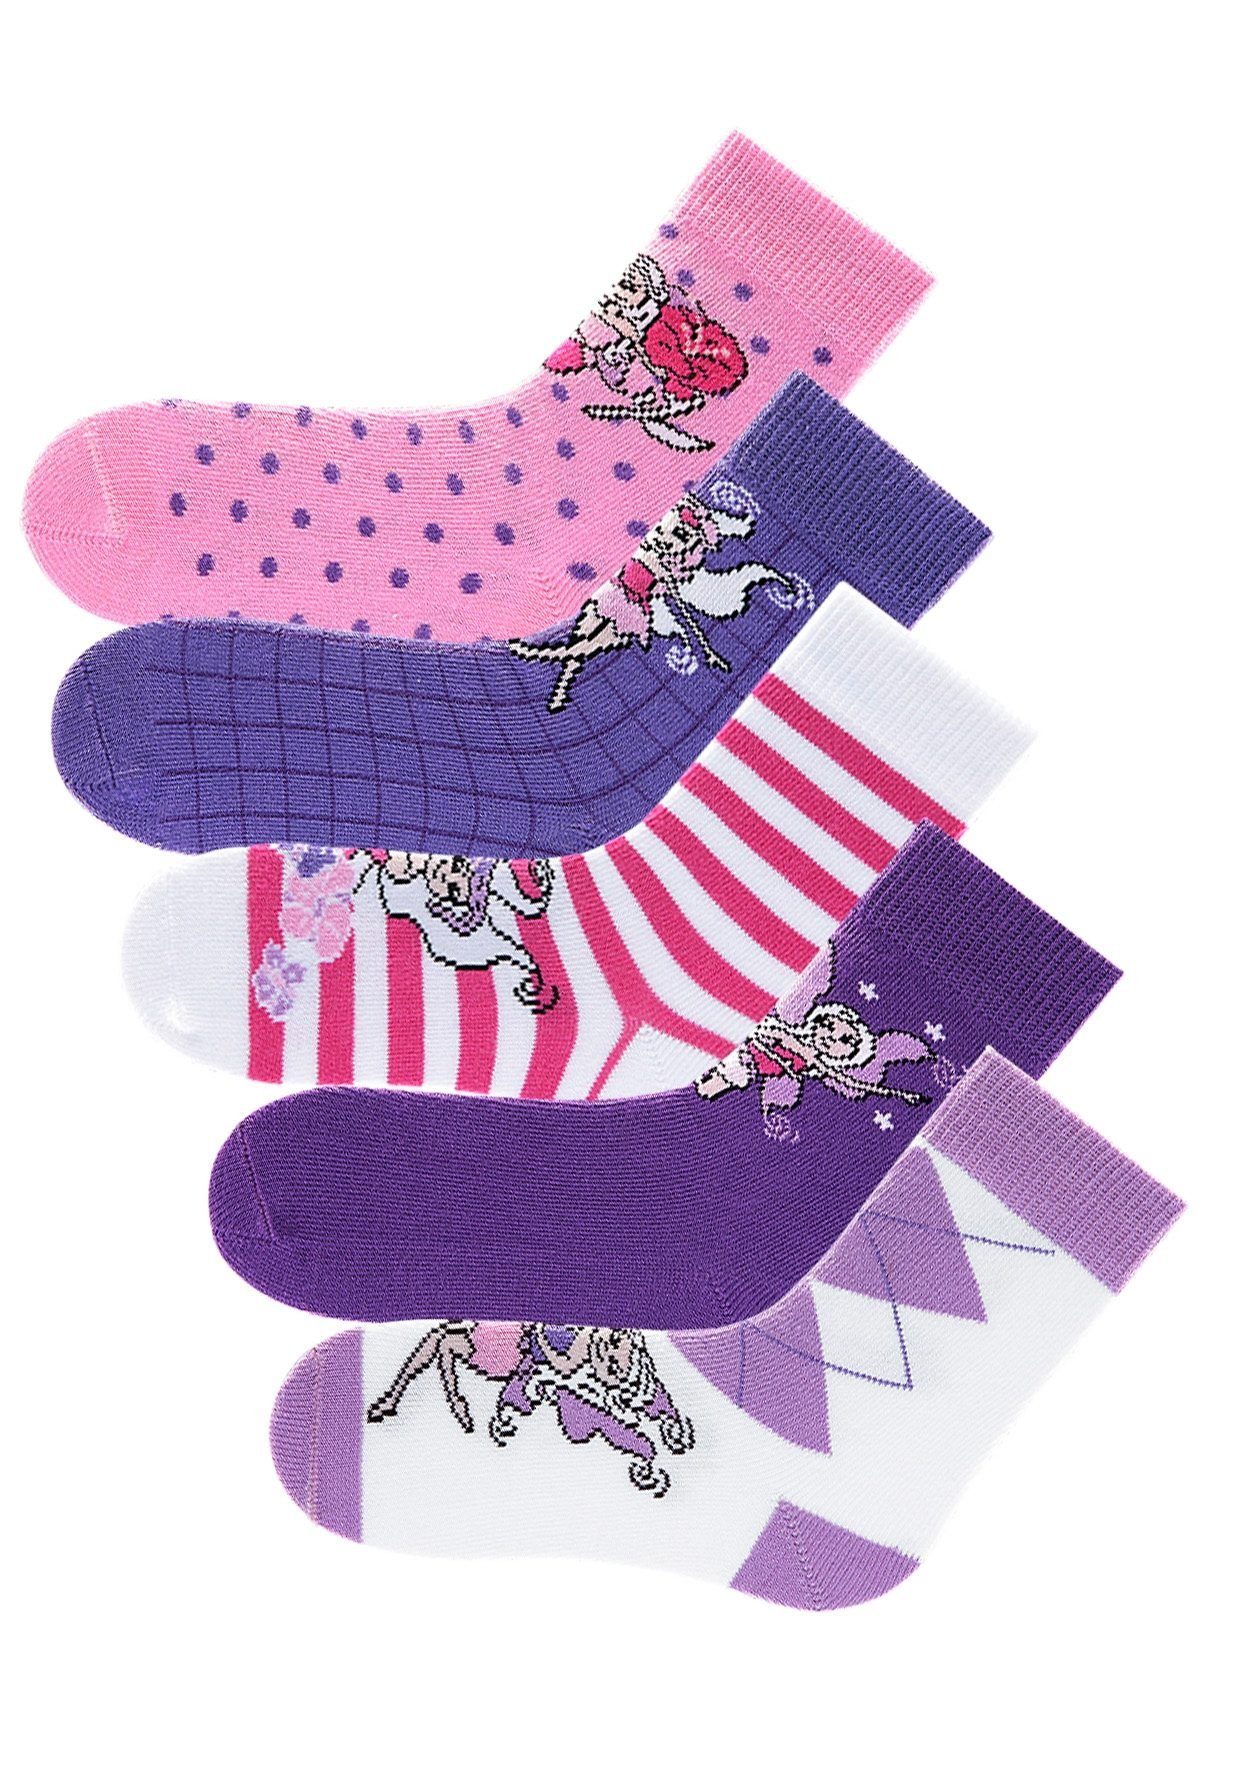 H.I.S Socken (5-Paar) in 5 Designs farbenfrohen